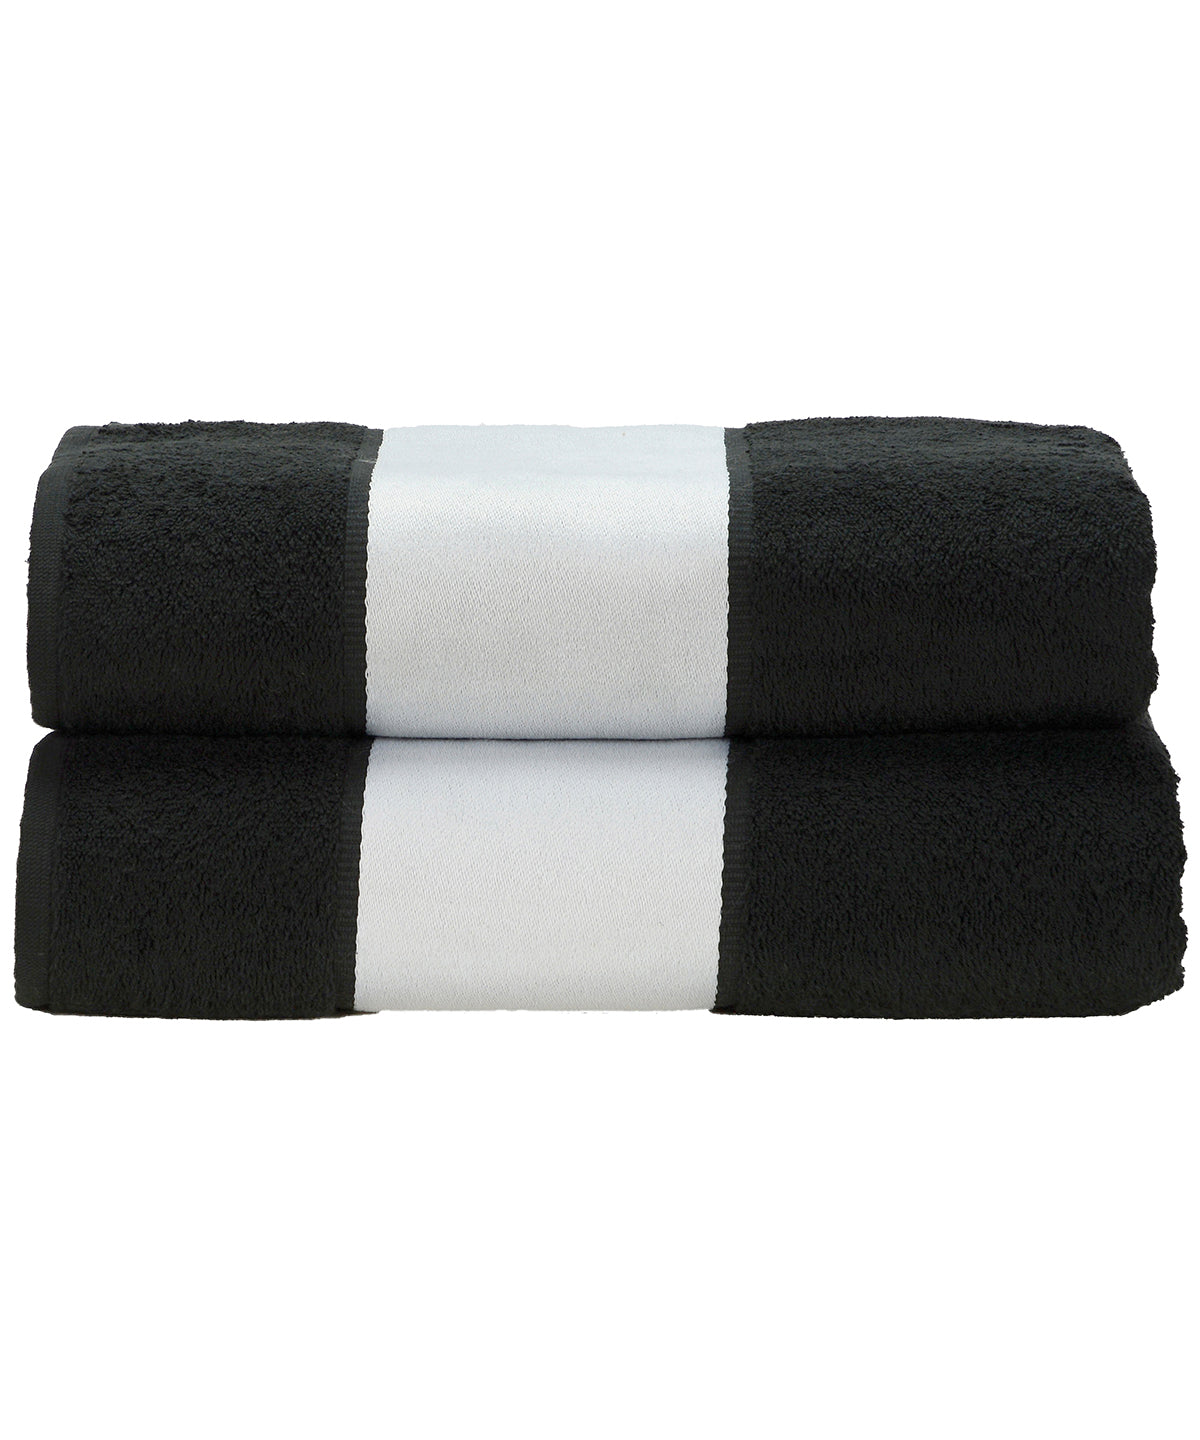 Personalised Towels - Black A&R Towels ARTG® SUBLI-Me® bath towel